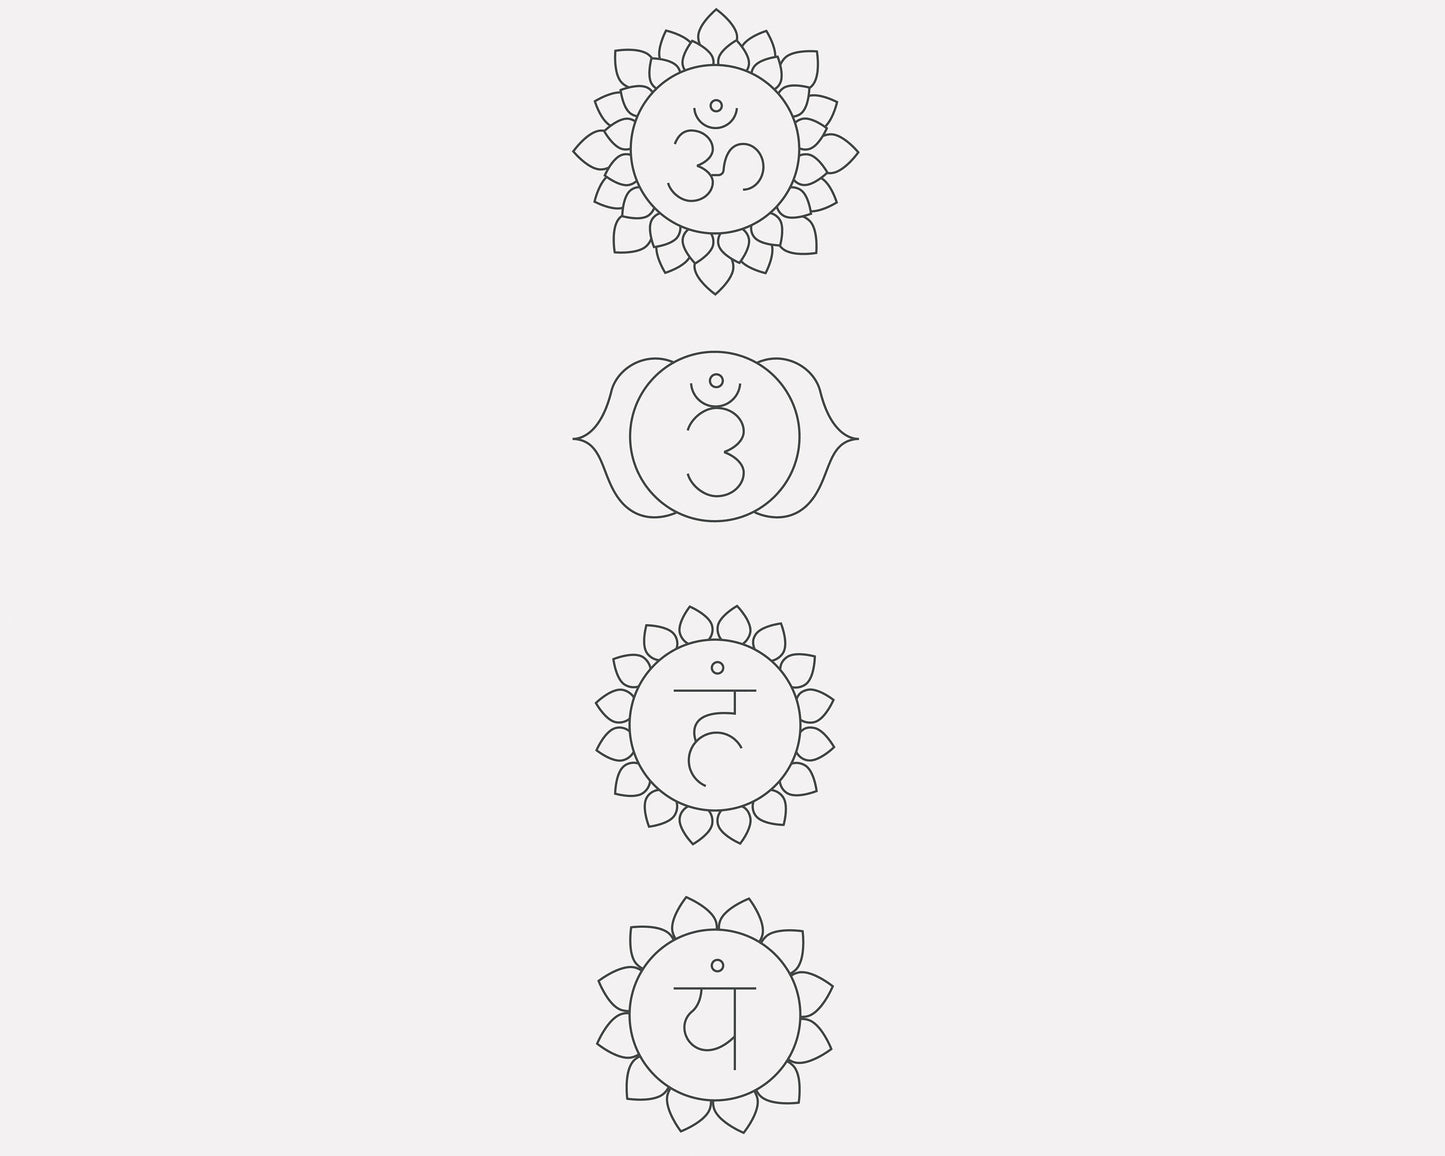 Chakra Symbole